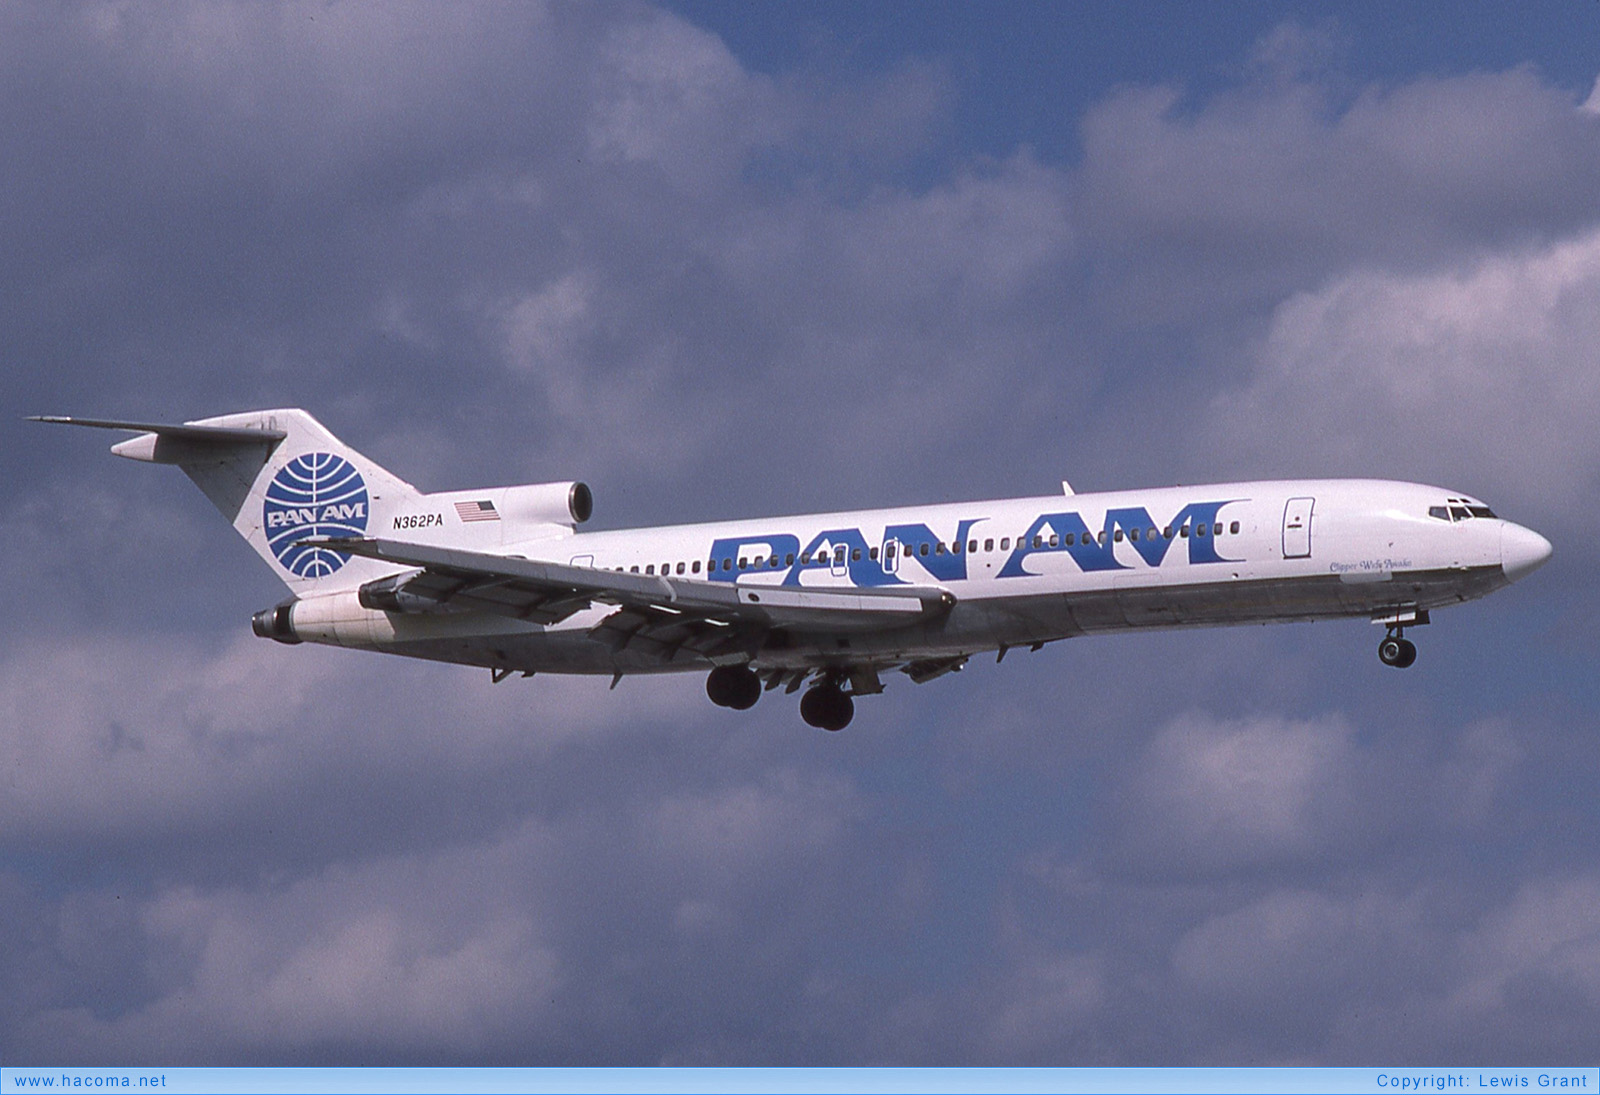 Foto von N362PA - Pan Am Clipper Frankfurt / Wide Awake - Miami International Airport - 22.11.1987